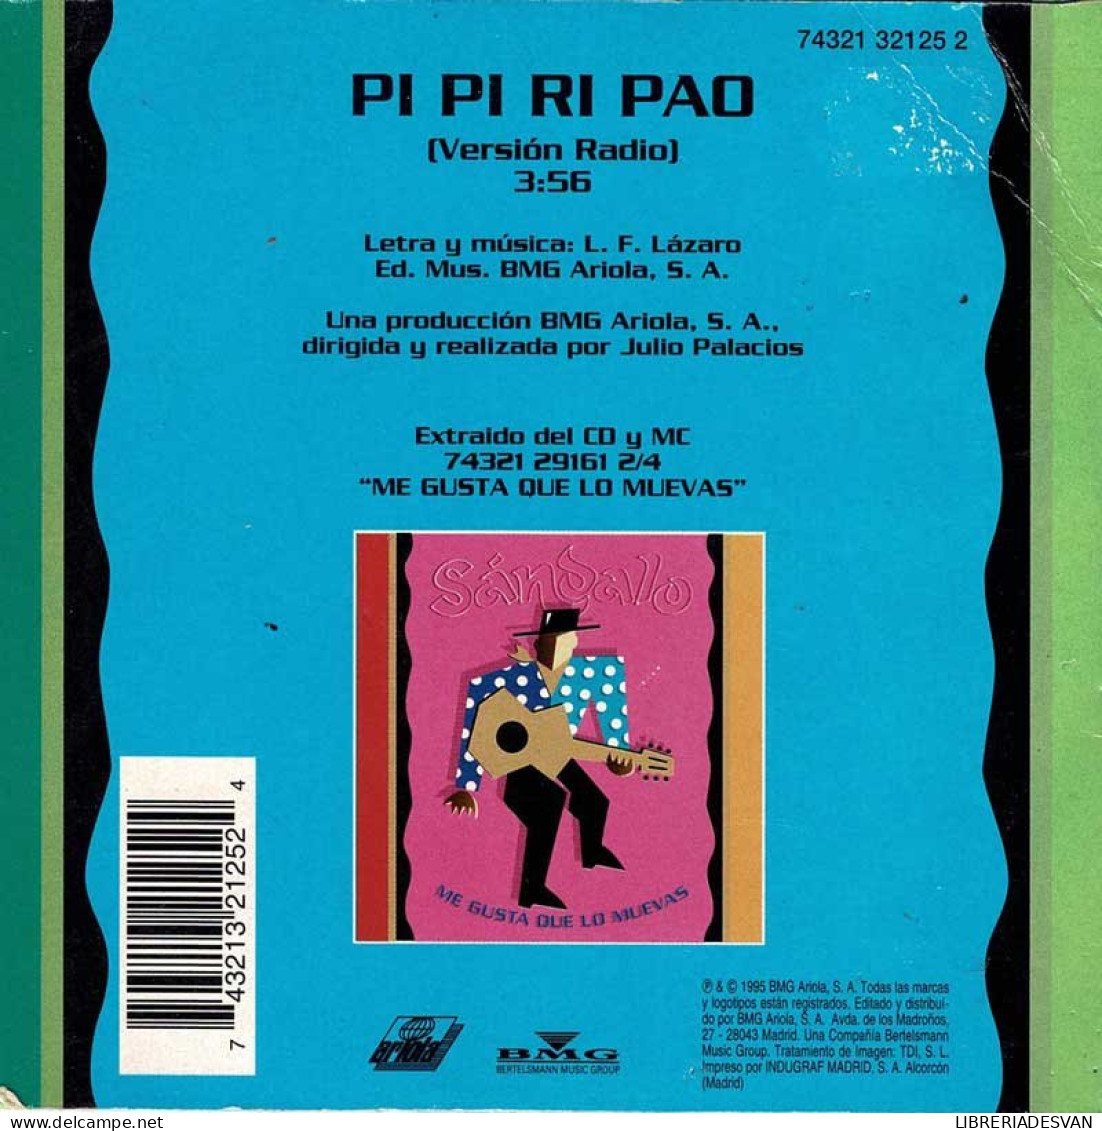 Sándalo - Pi Pi Ri Pao (versión Radio). CD Single - Other - Spanish Music